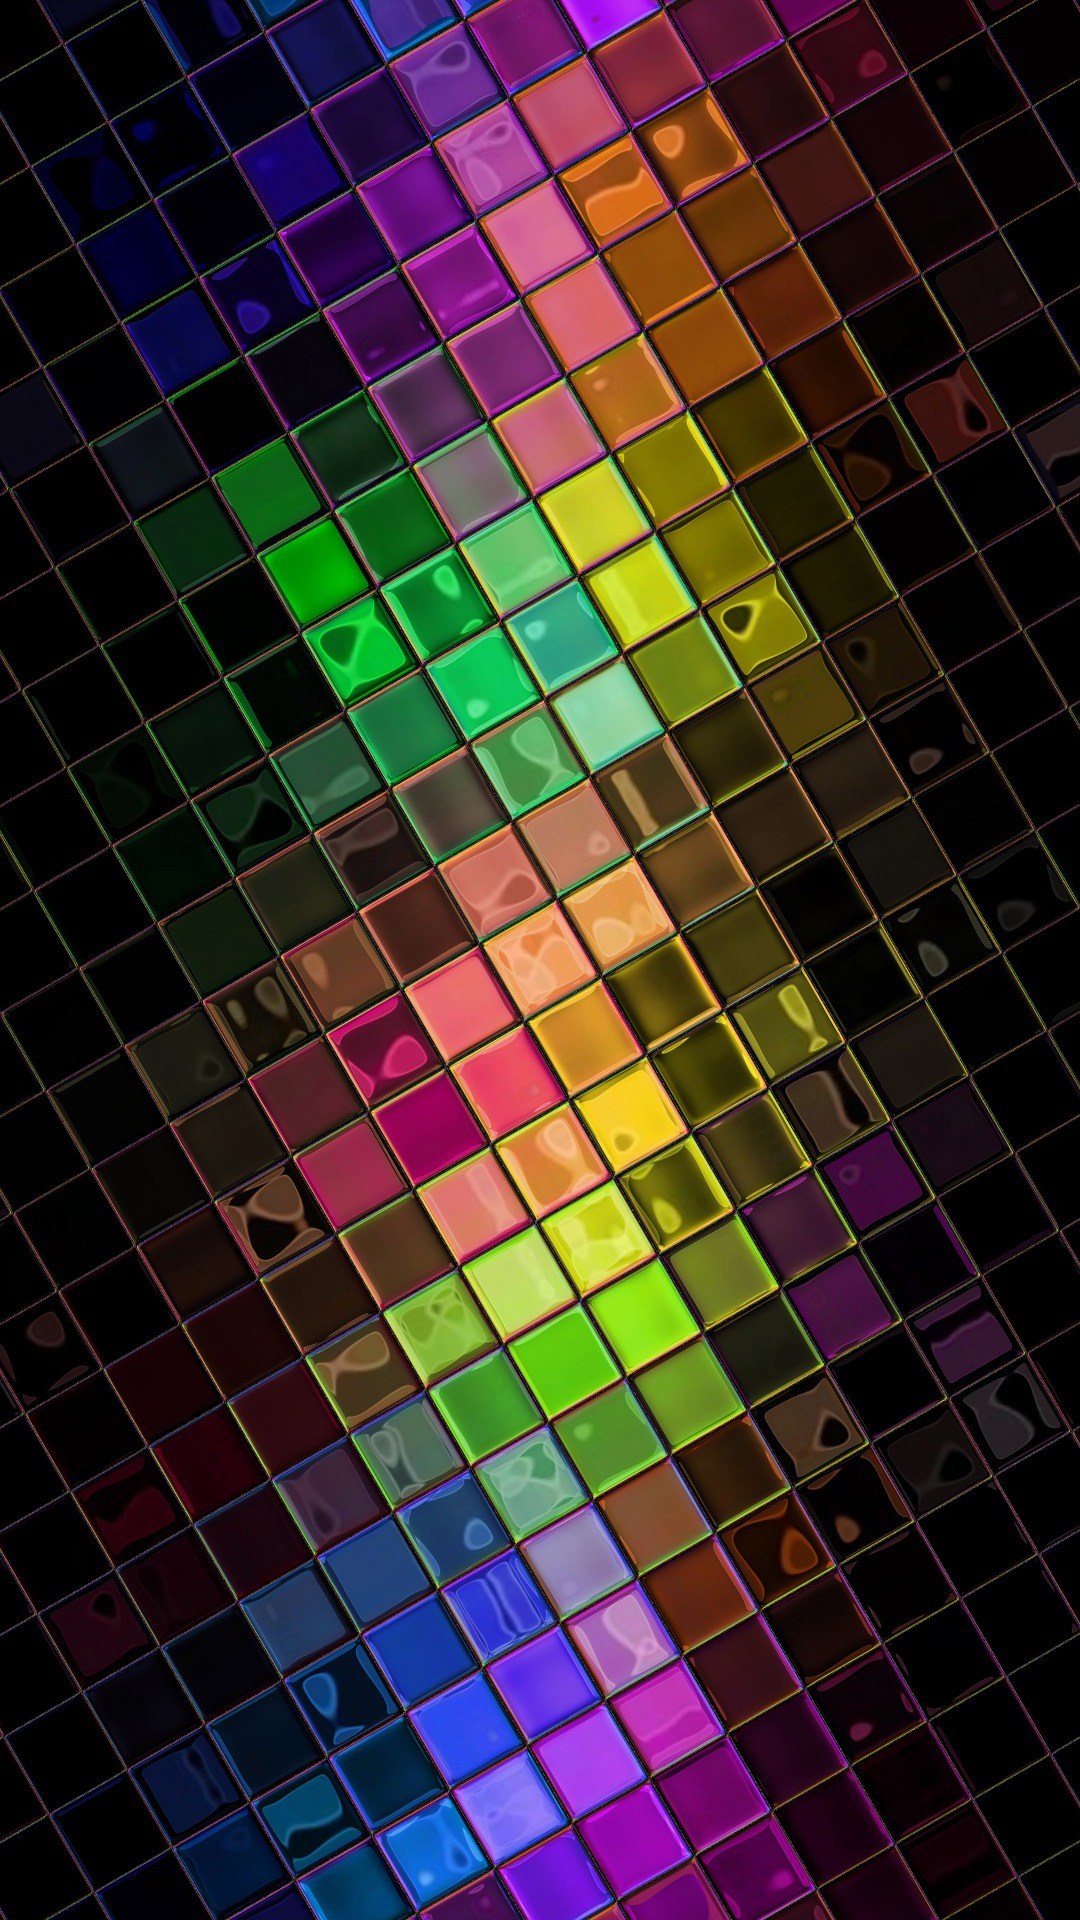 Squares Full HD Wallpaper For iPhone Plus